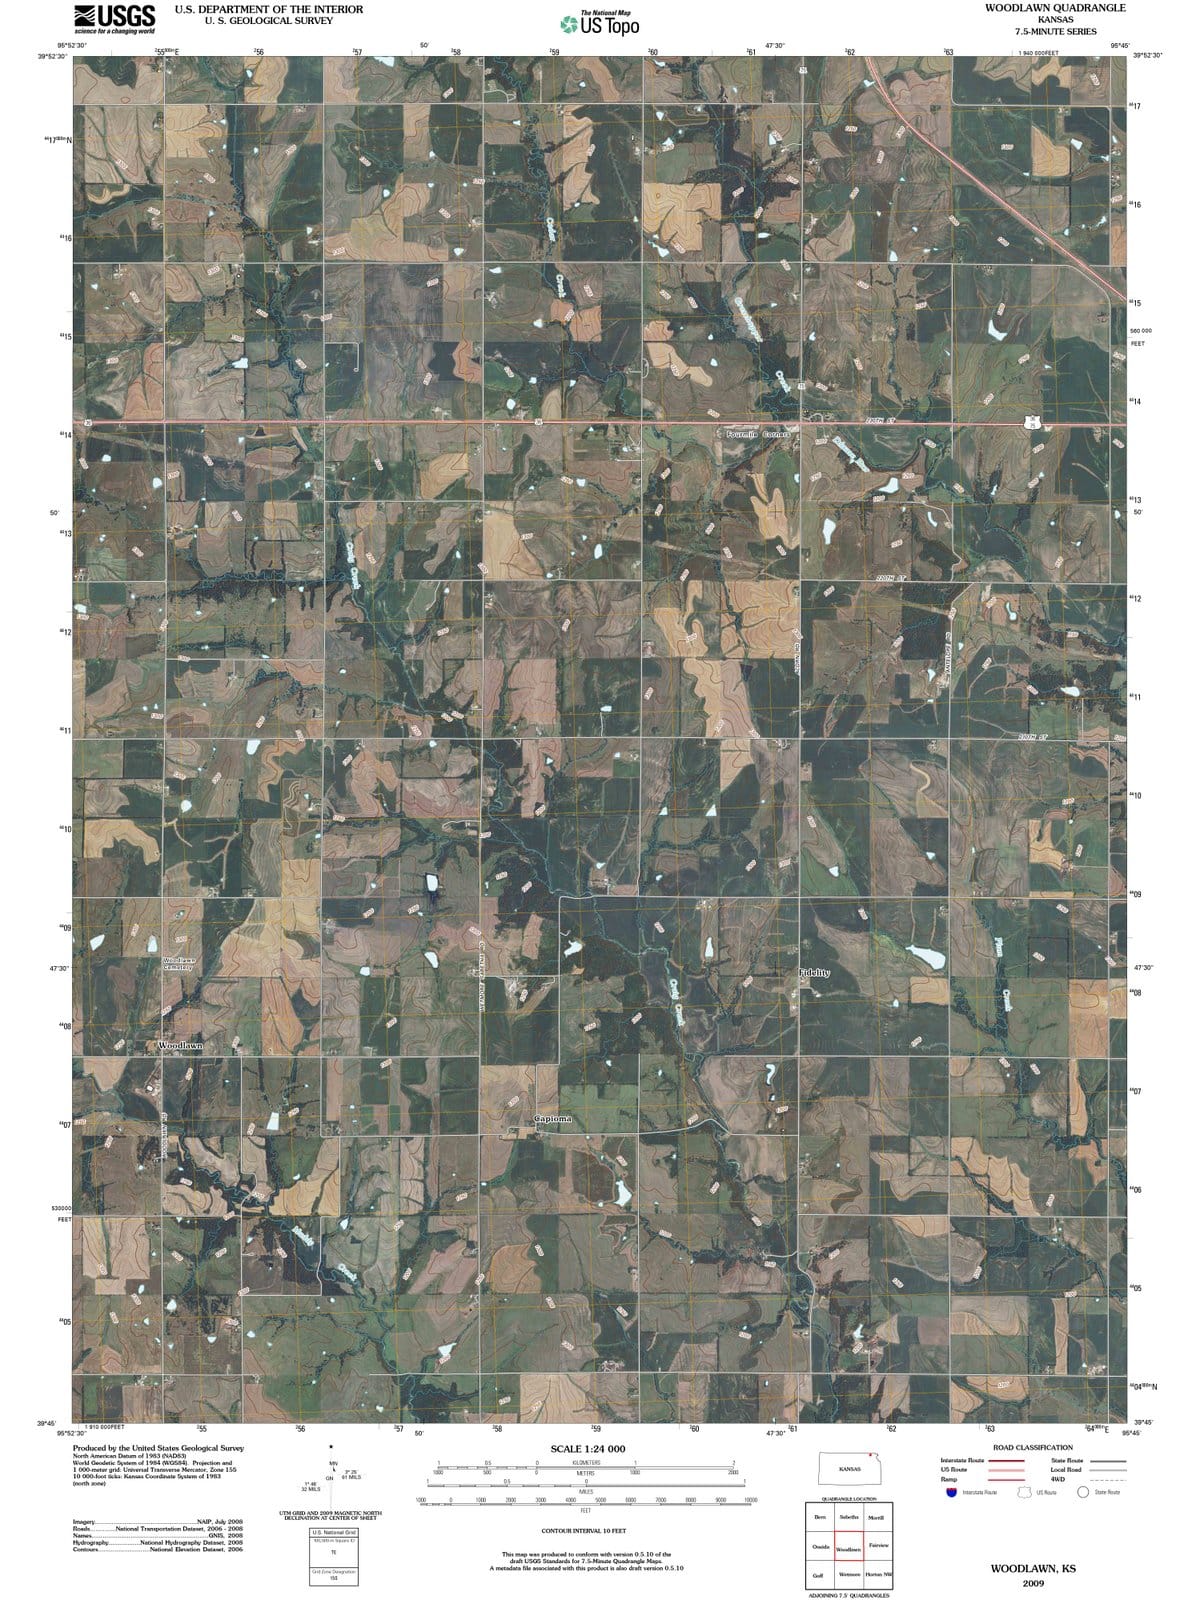 2009 Woodlawn, KS - Kansas - USGS Topographic Map